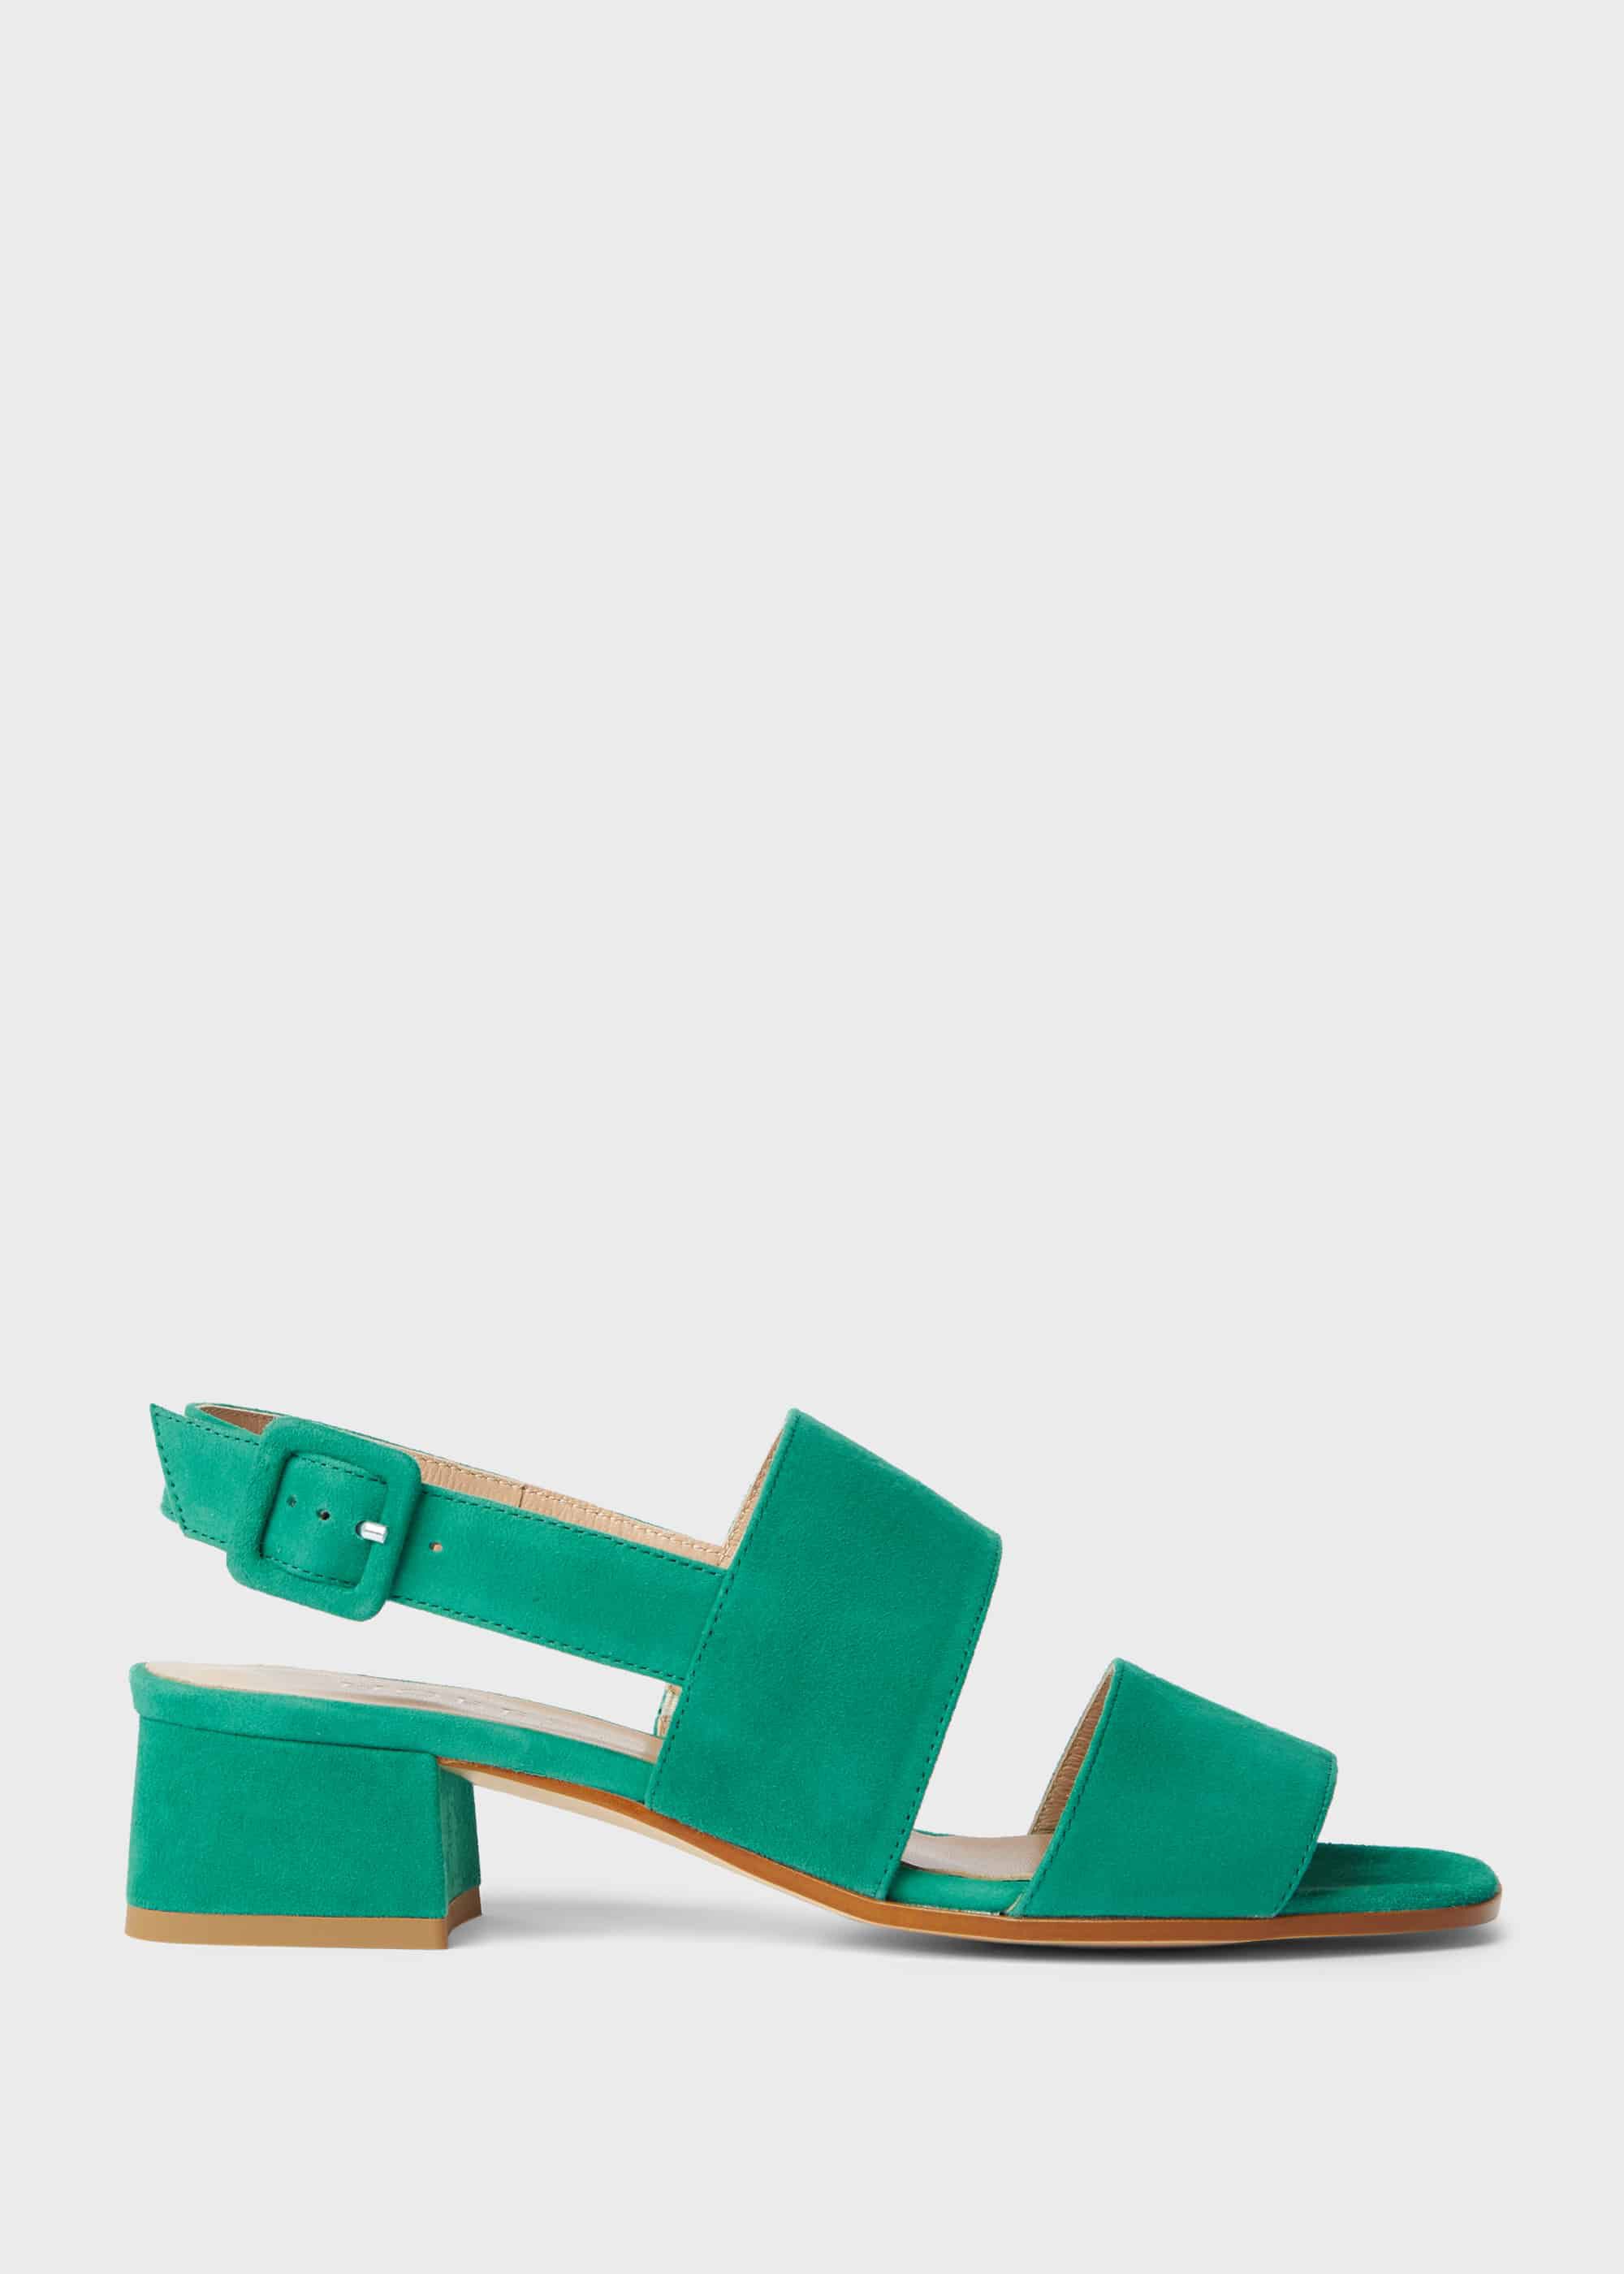 teal green sandals